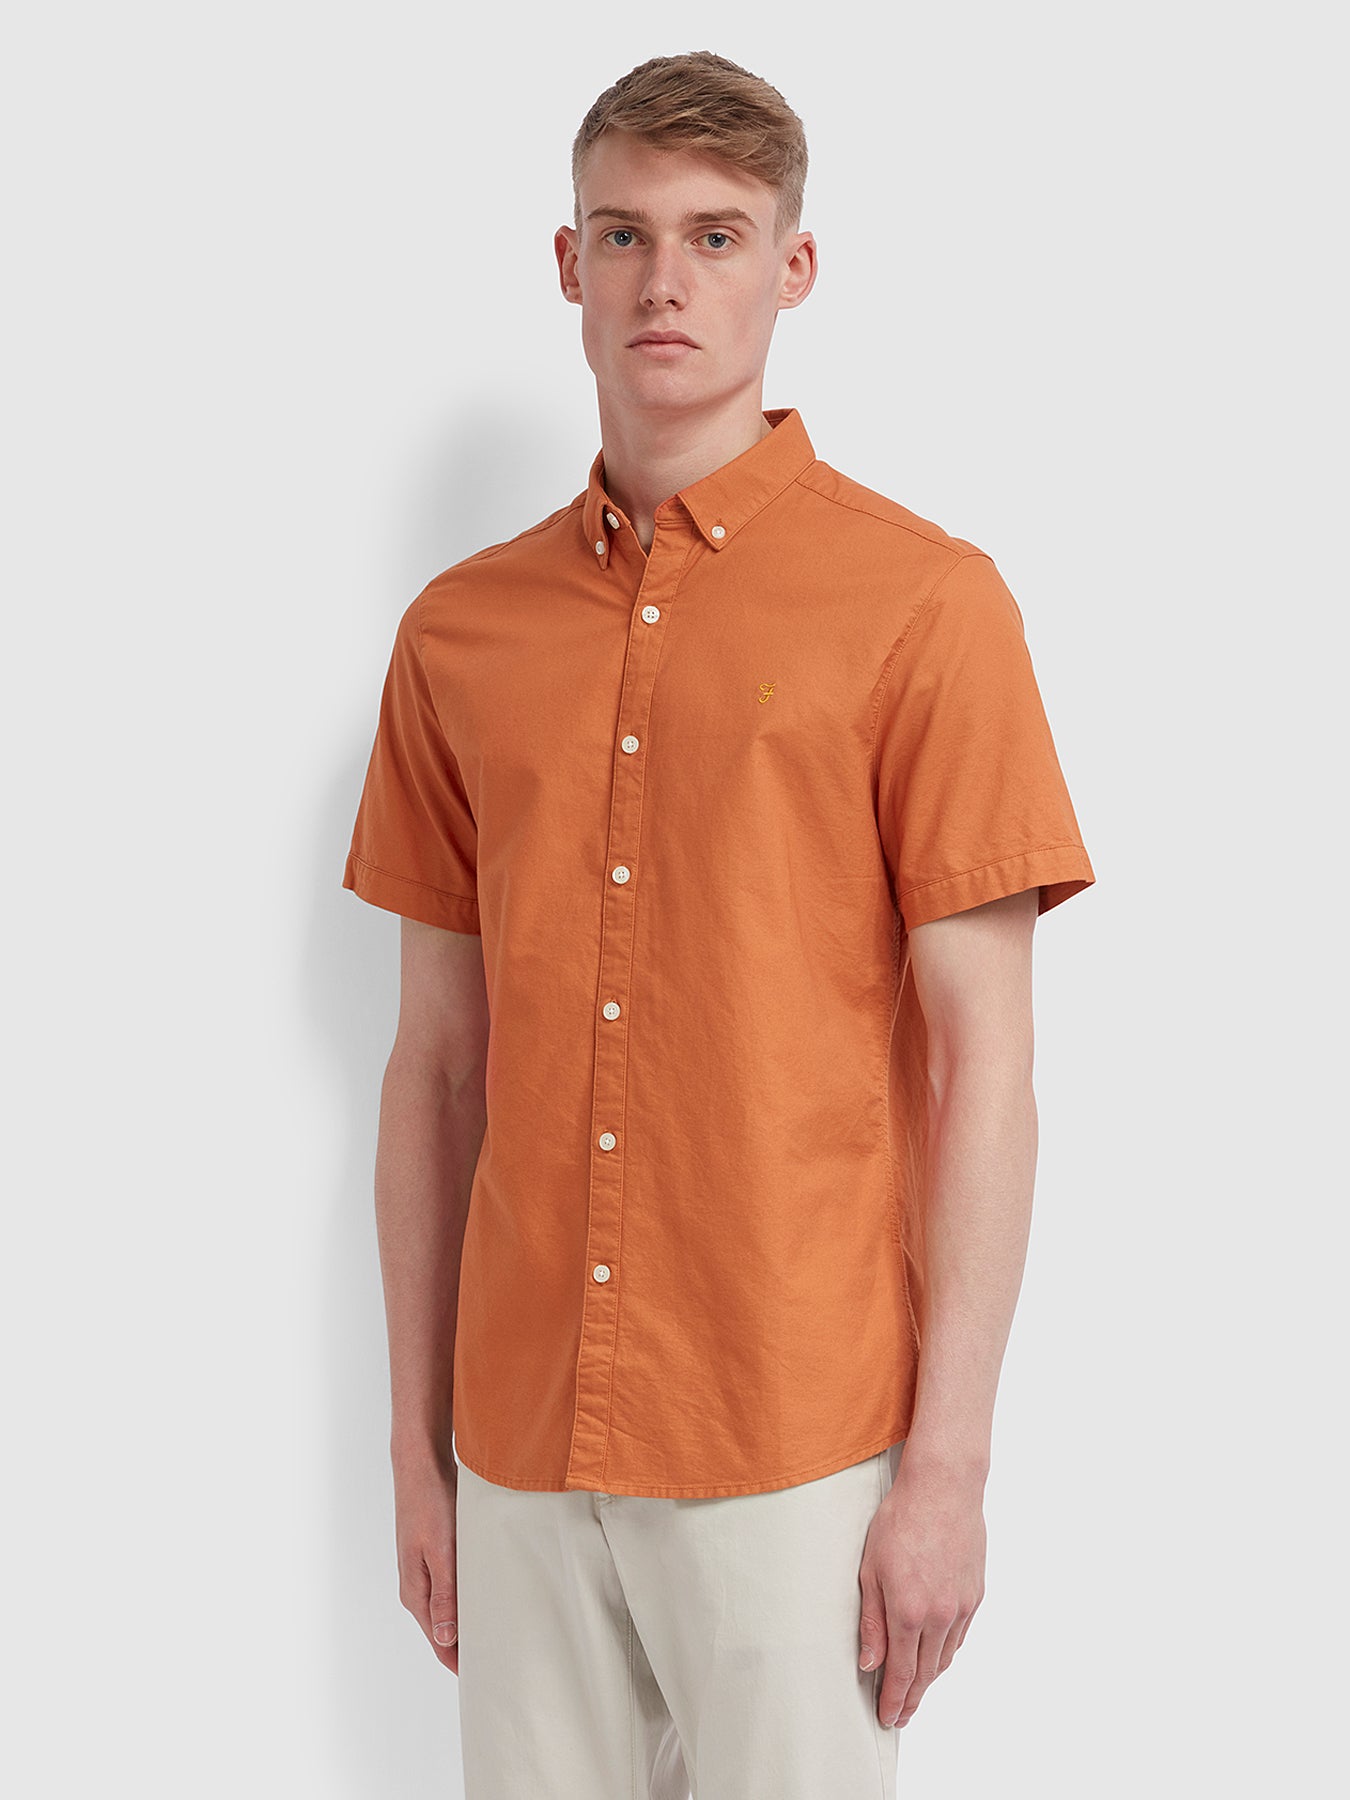 View Brewer Slim Fit Short Sleeve Oxford Shirt In Moroccan Orange information